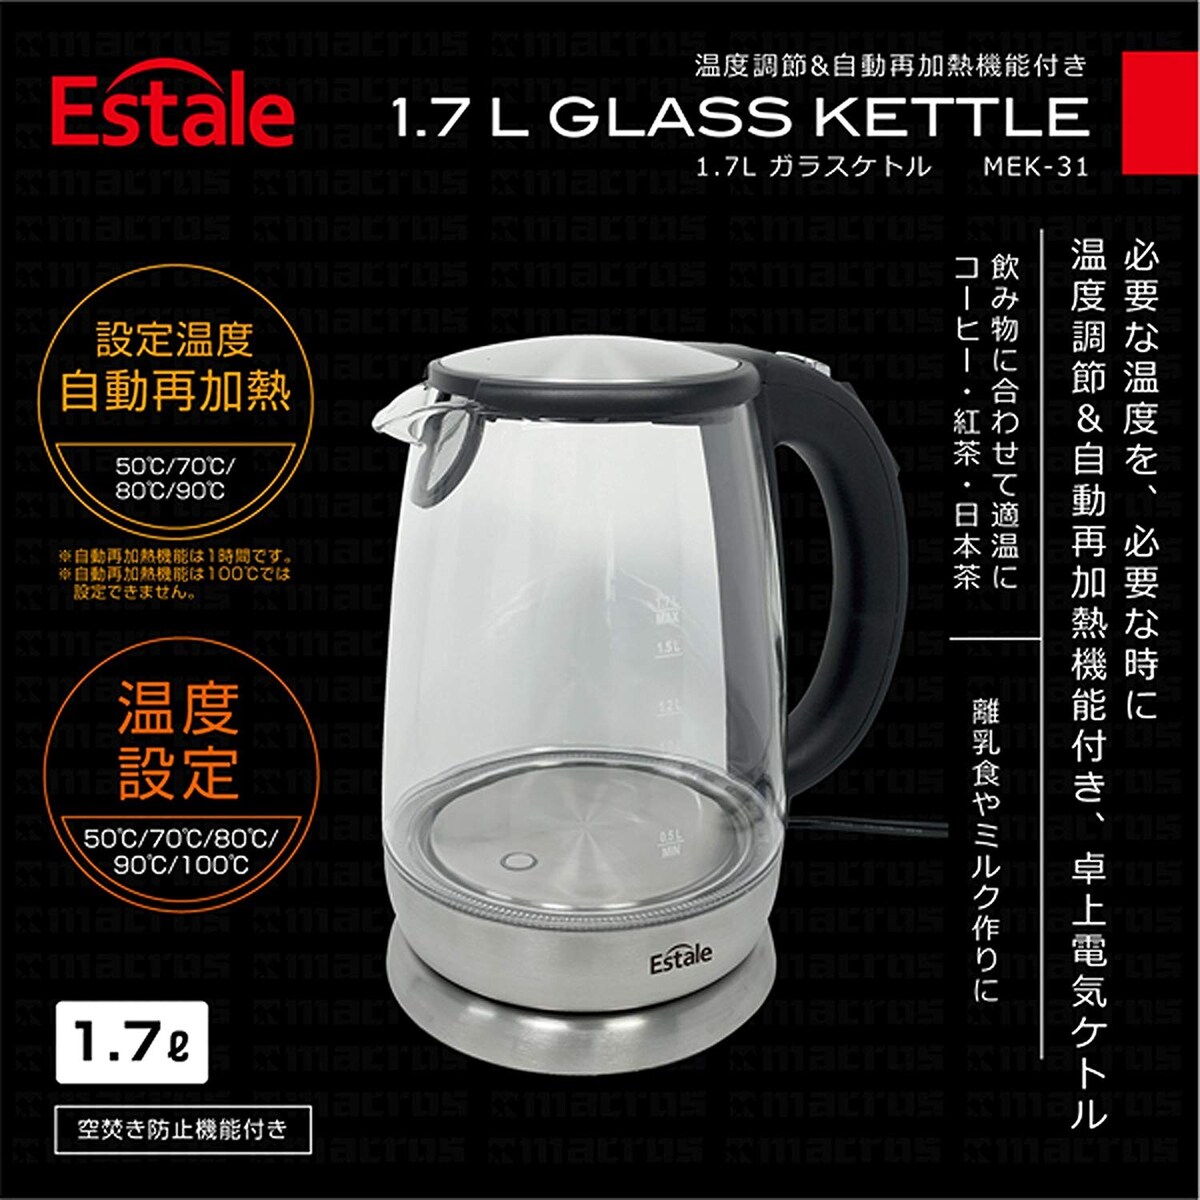  Estale ガラス&ステンレス電気ケトル画像2 